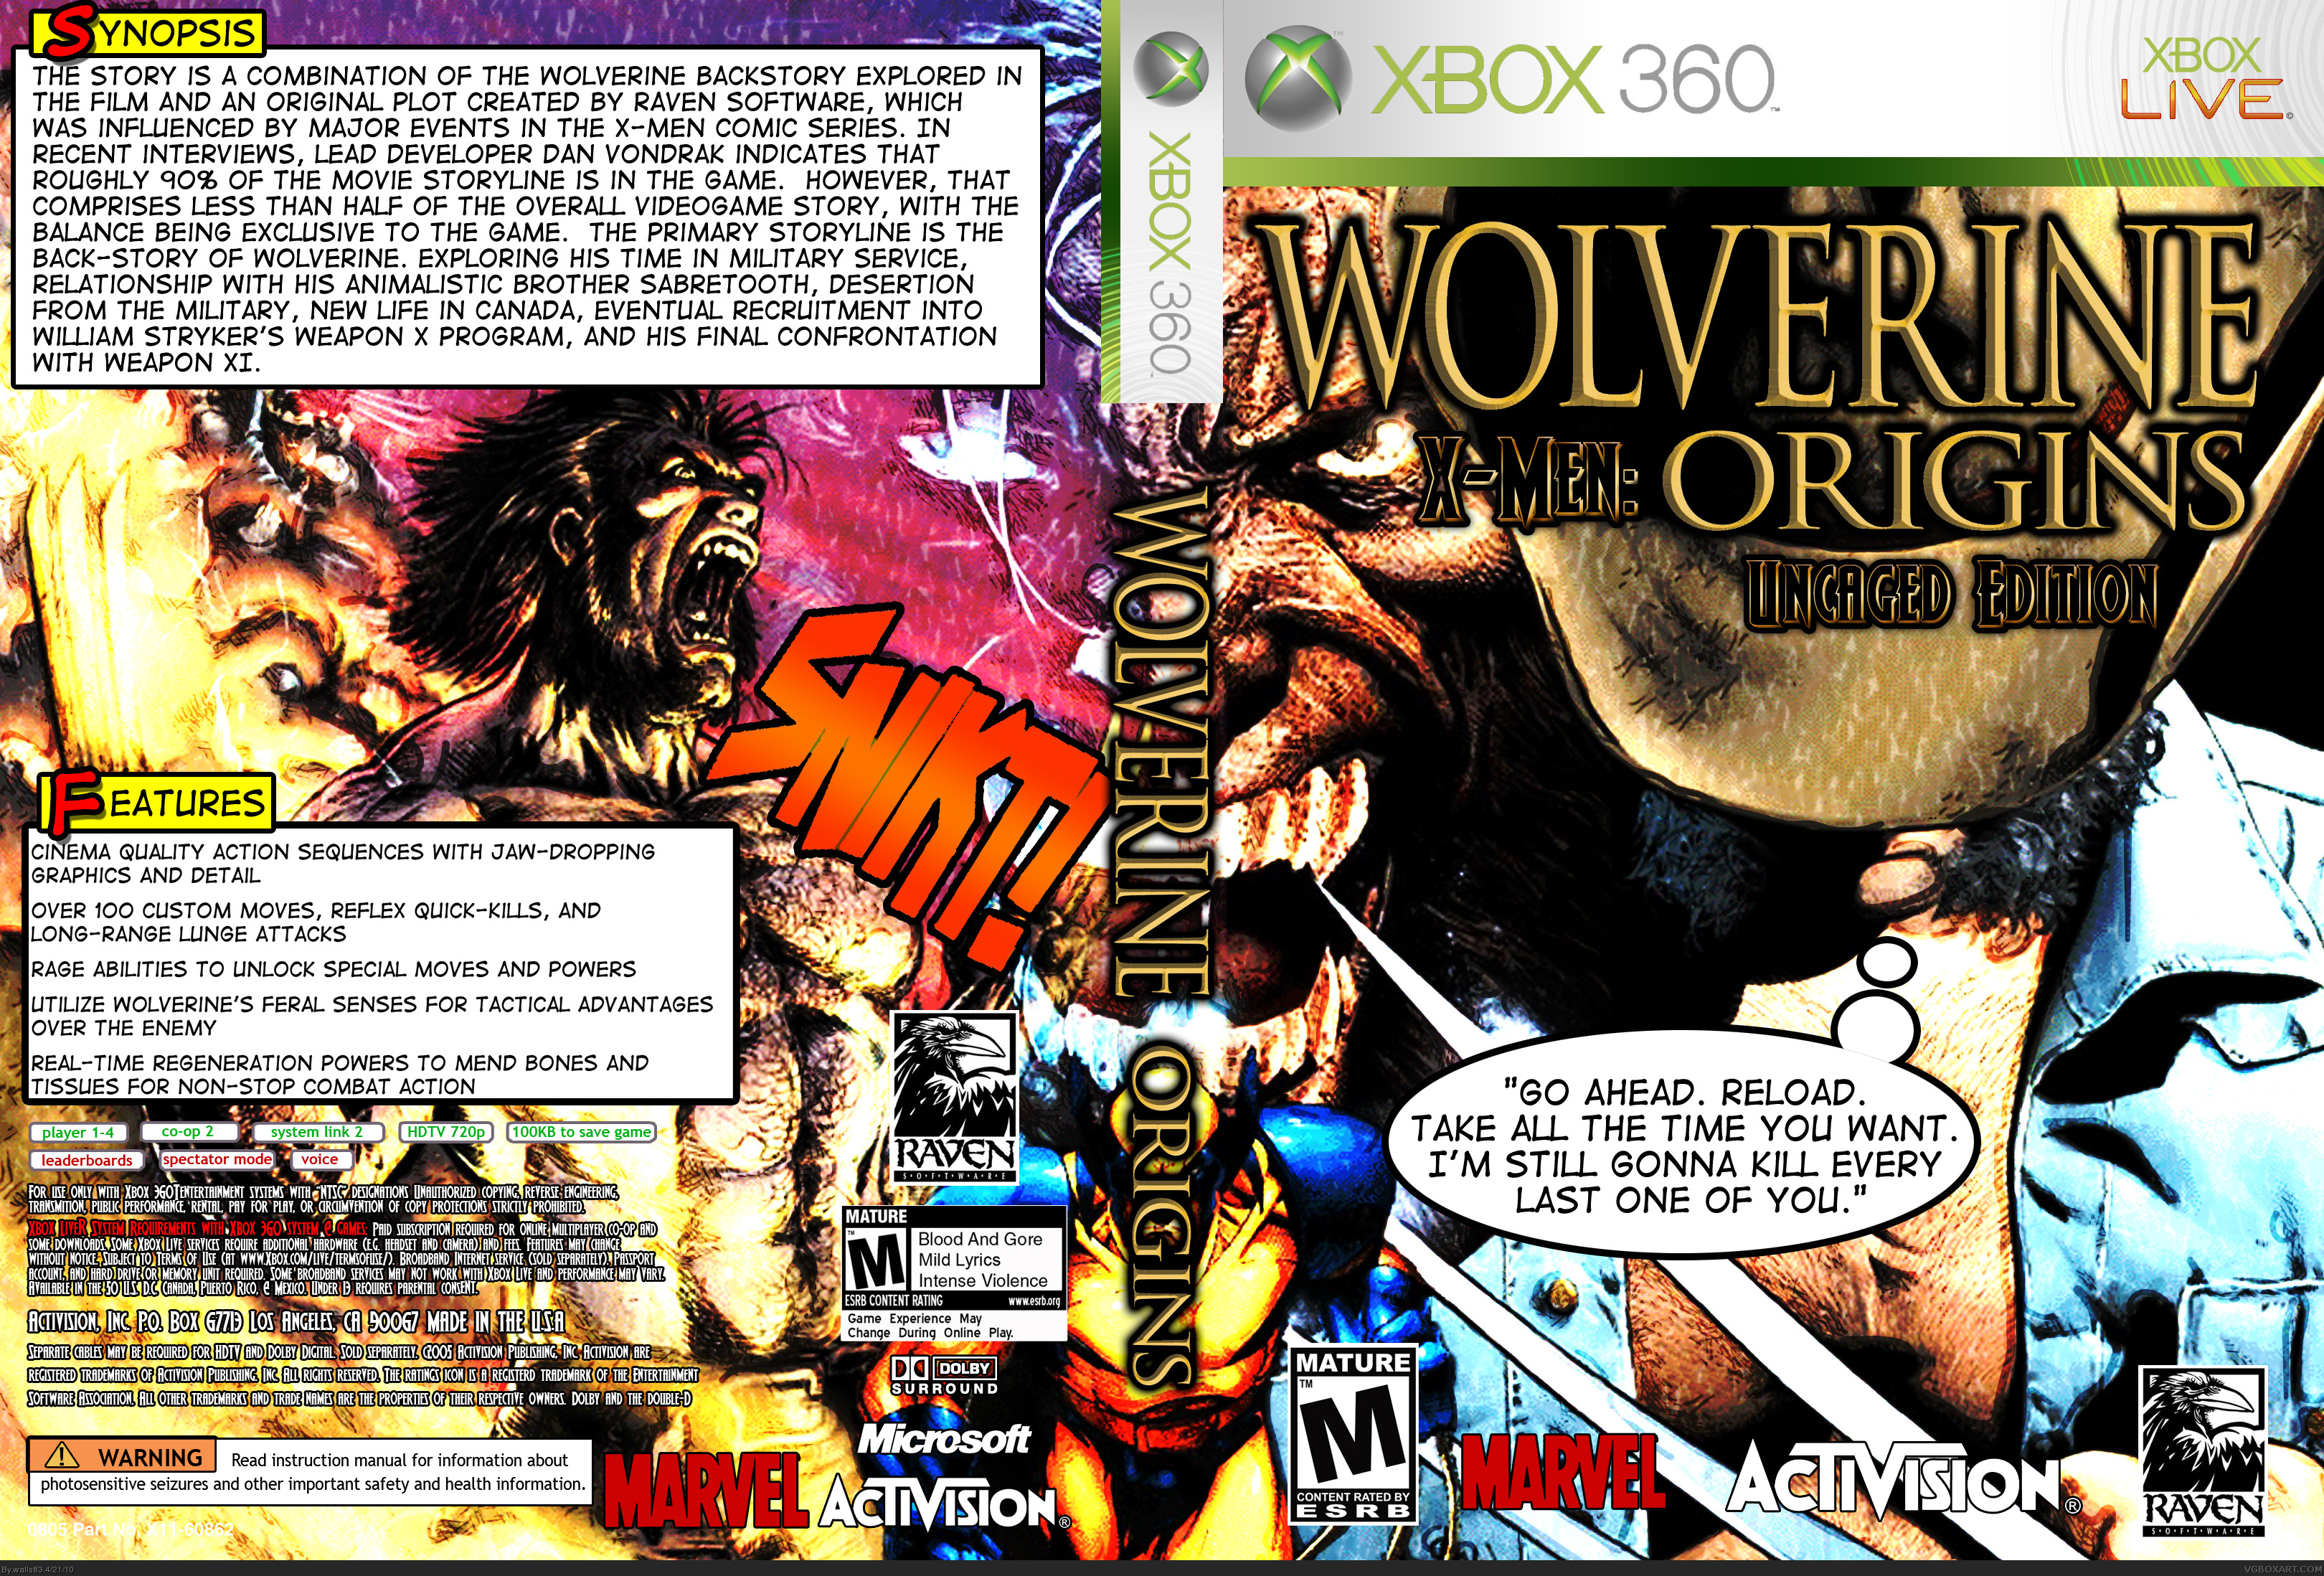 X-Men Origins: Wolverine Uncaged Edition box cover